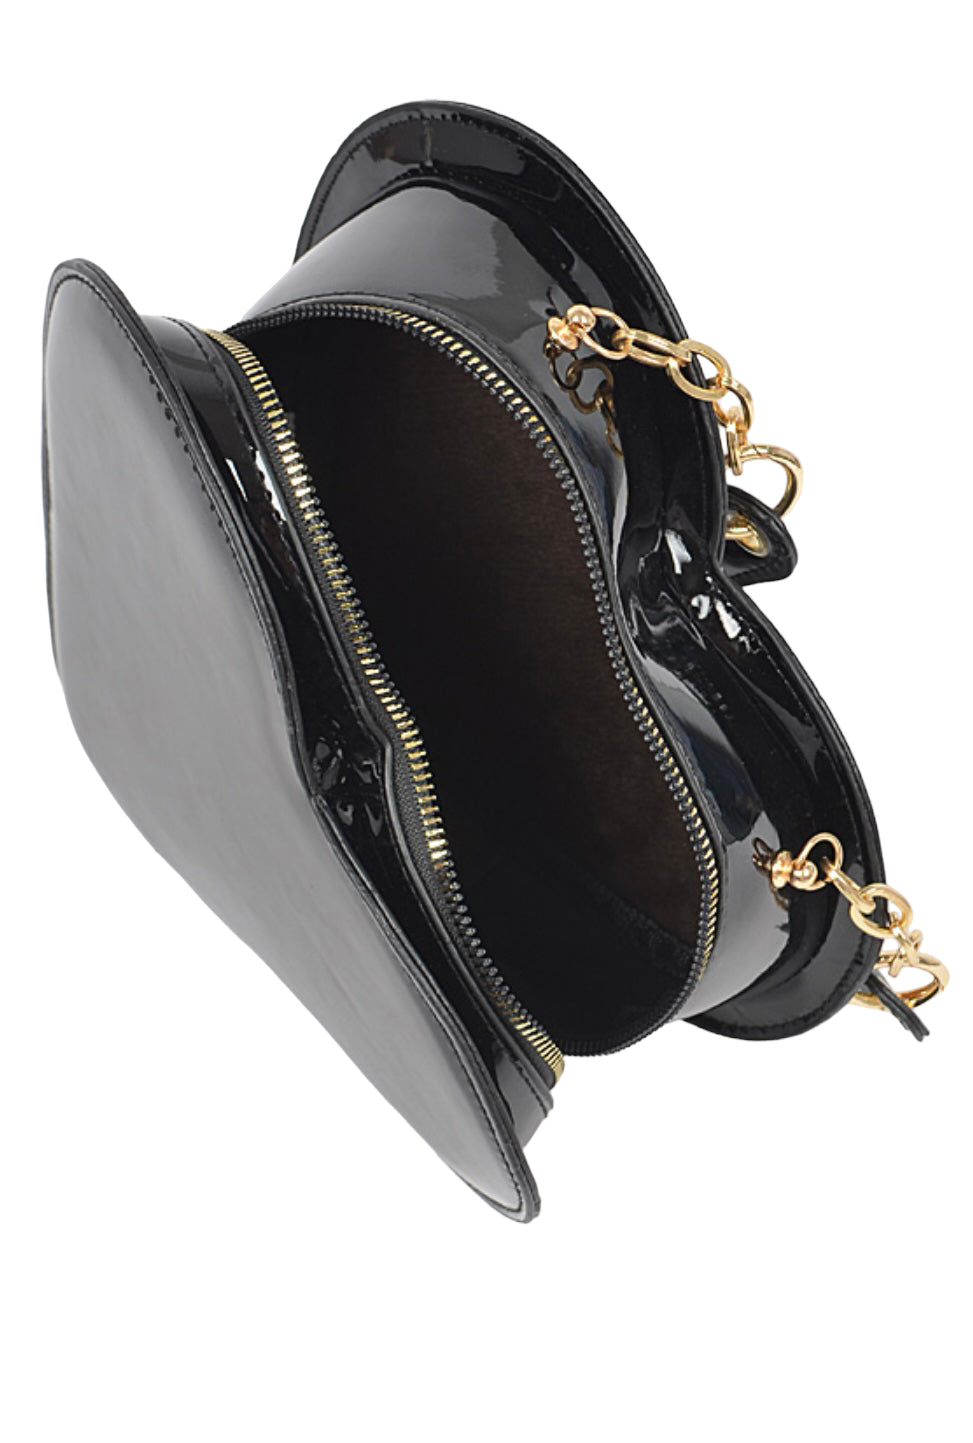 Patent Vegan Leather handbag